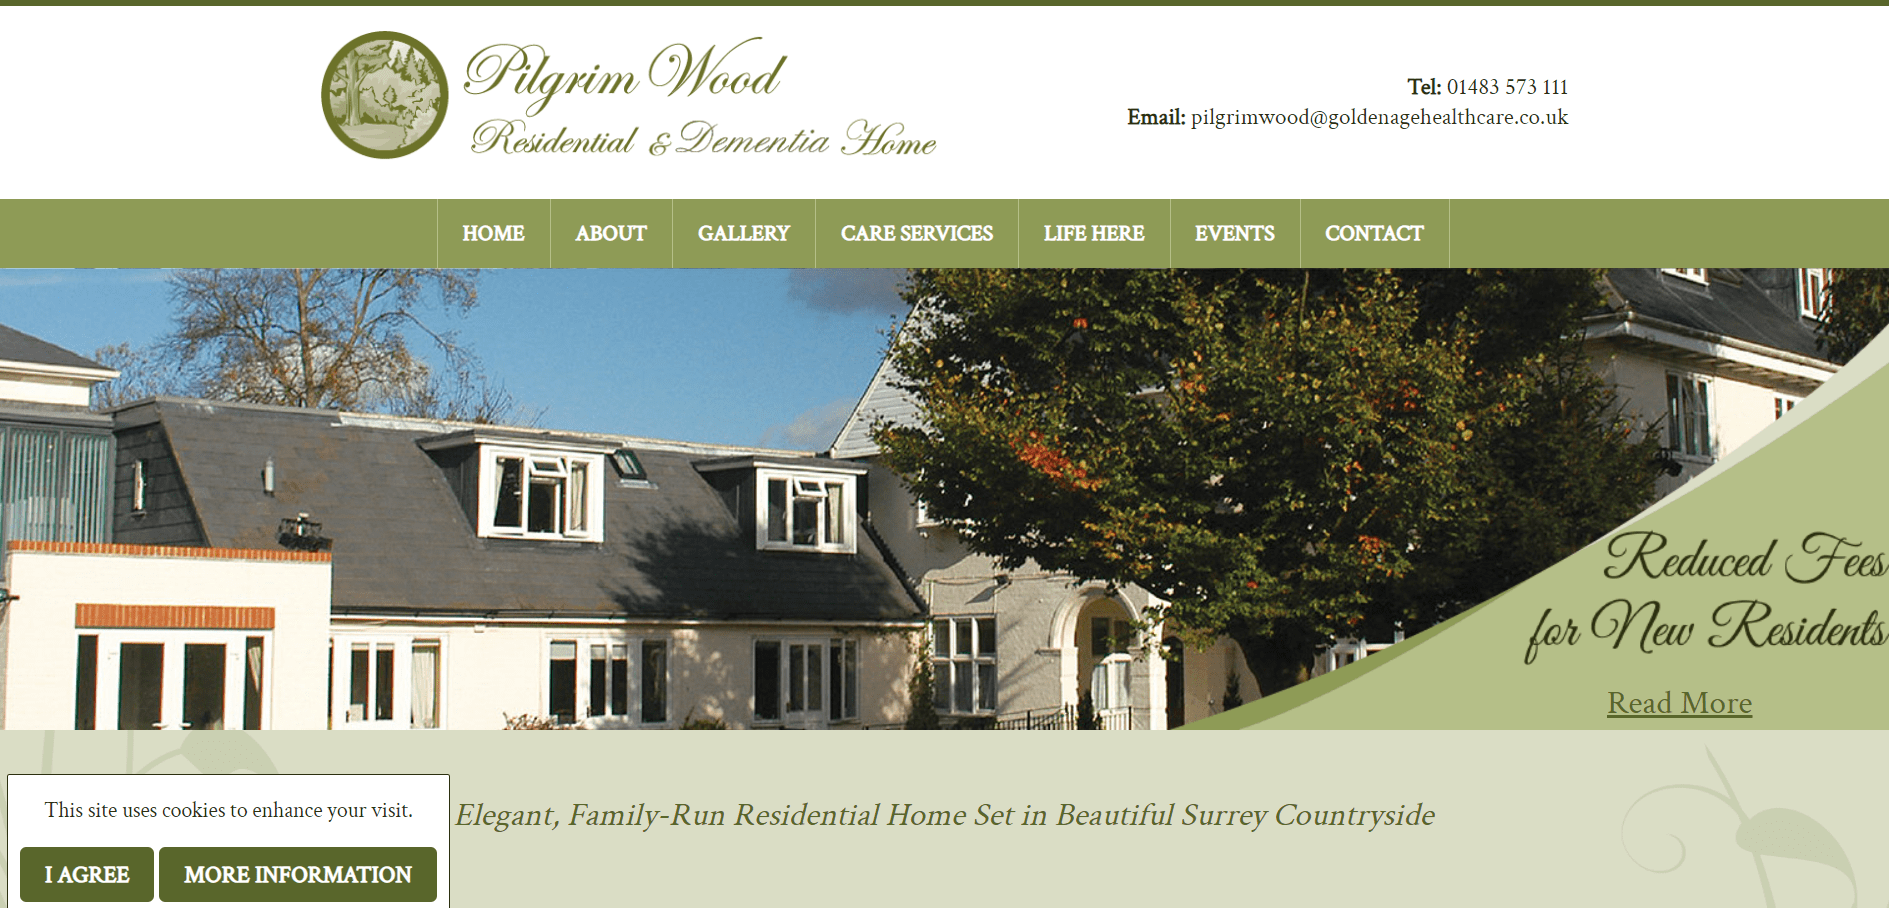 Pilgrim Wood Residential & Dementia Care Home